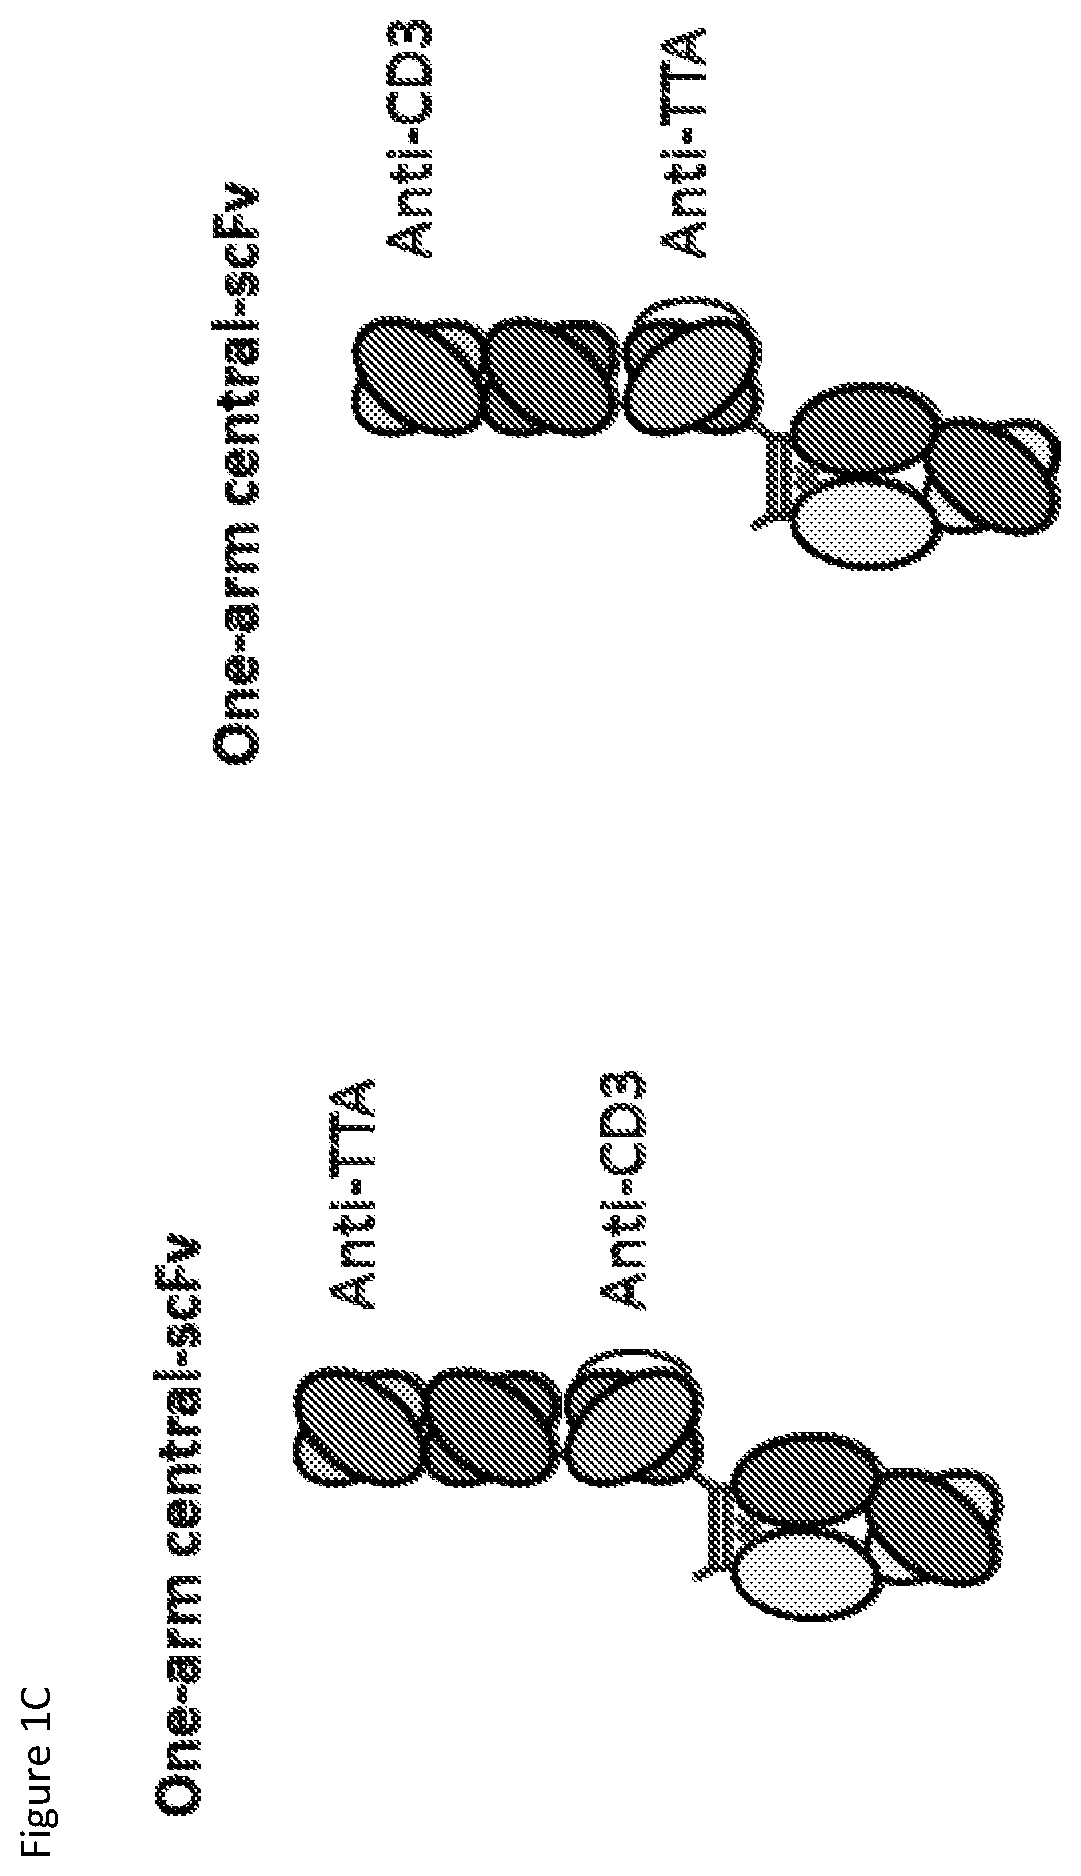 Heterodimeric antibodies that bind CD3 and tumor antigens